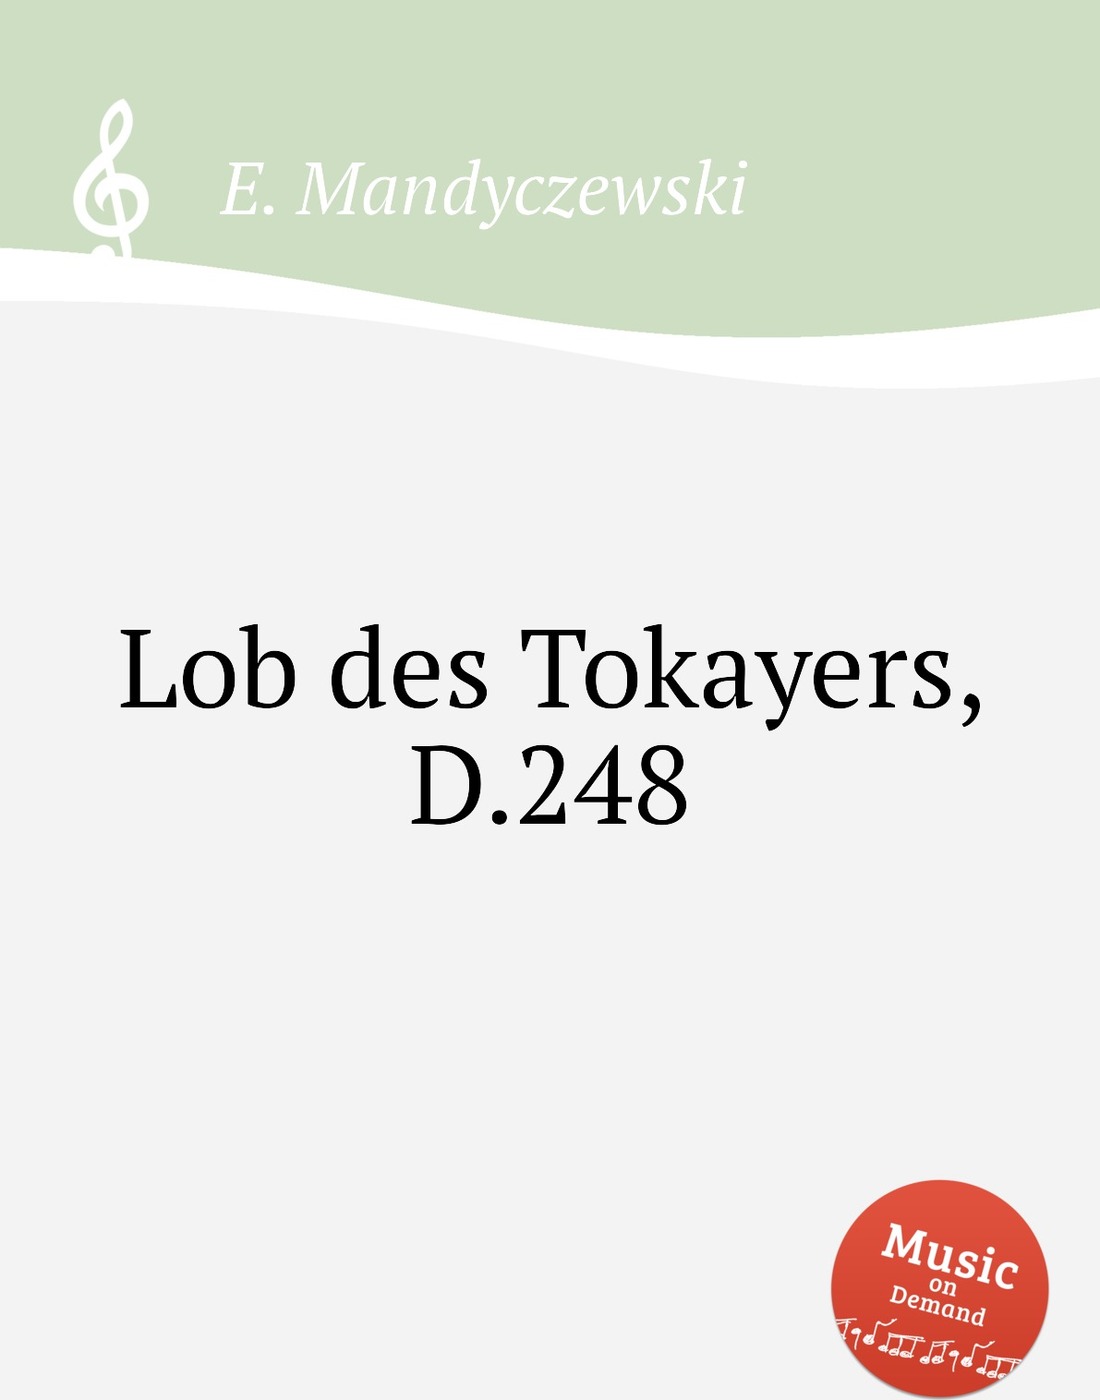 Книга "Lob des Tokayers, D.248" - купить книгу ISBN 9785884757820...